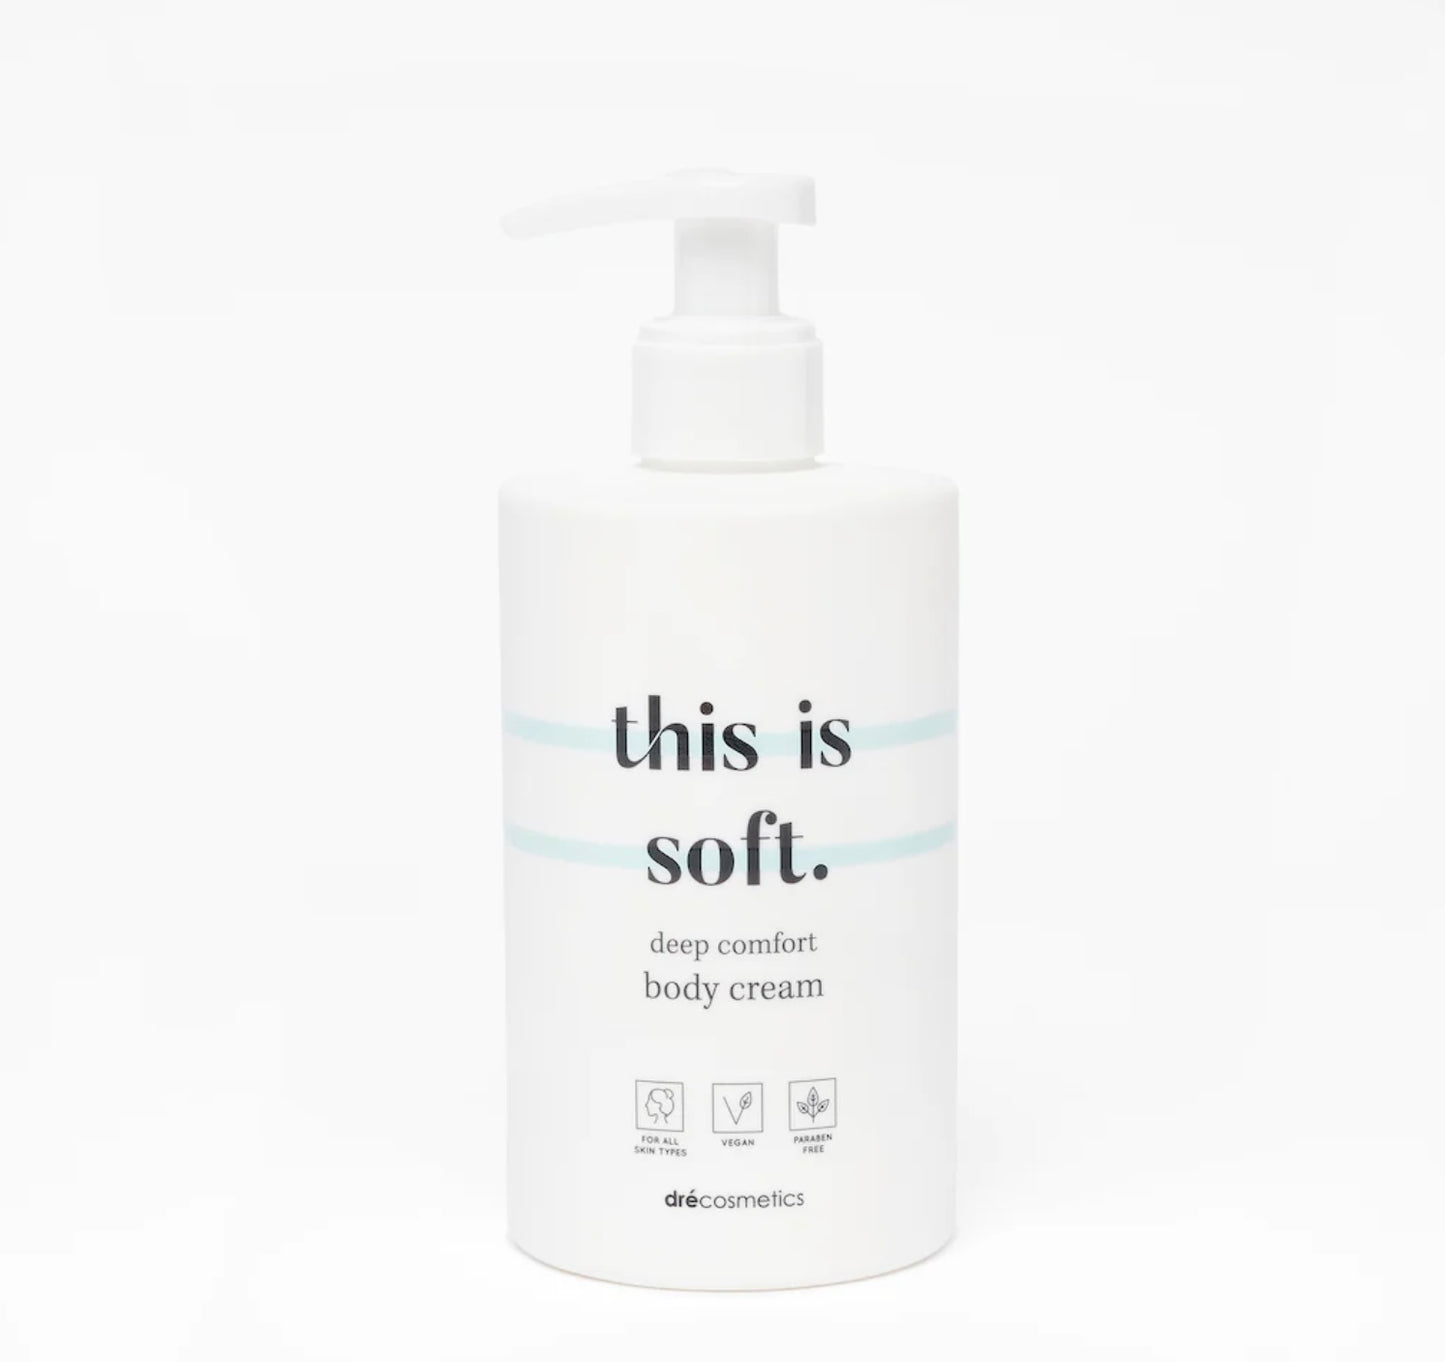 Body Cream "this is soft”